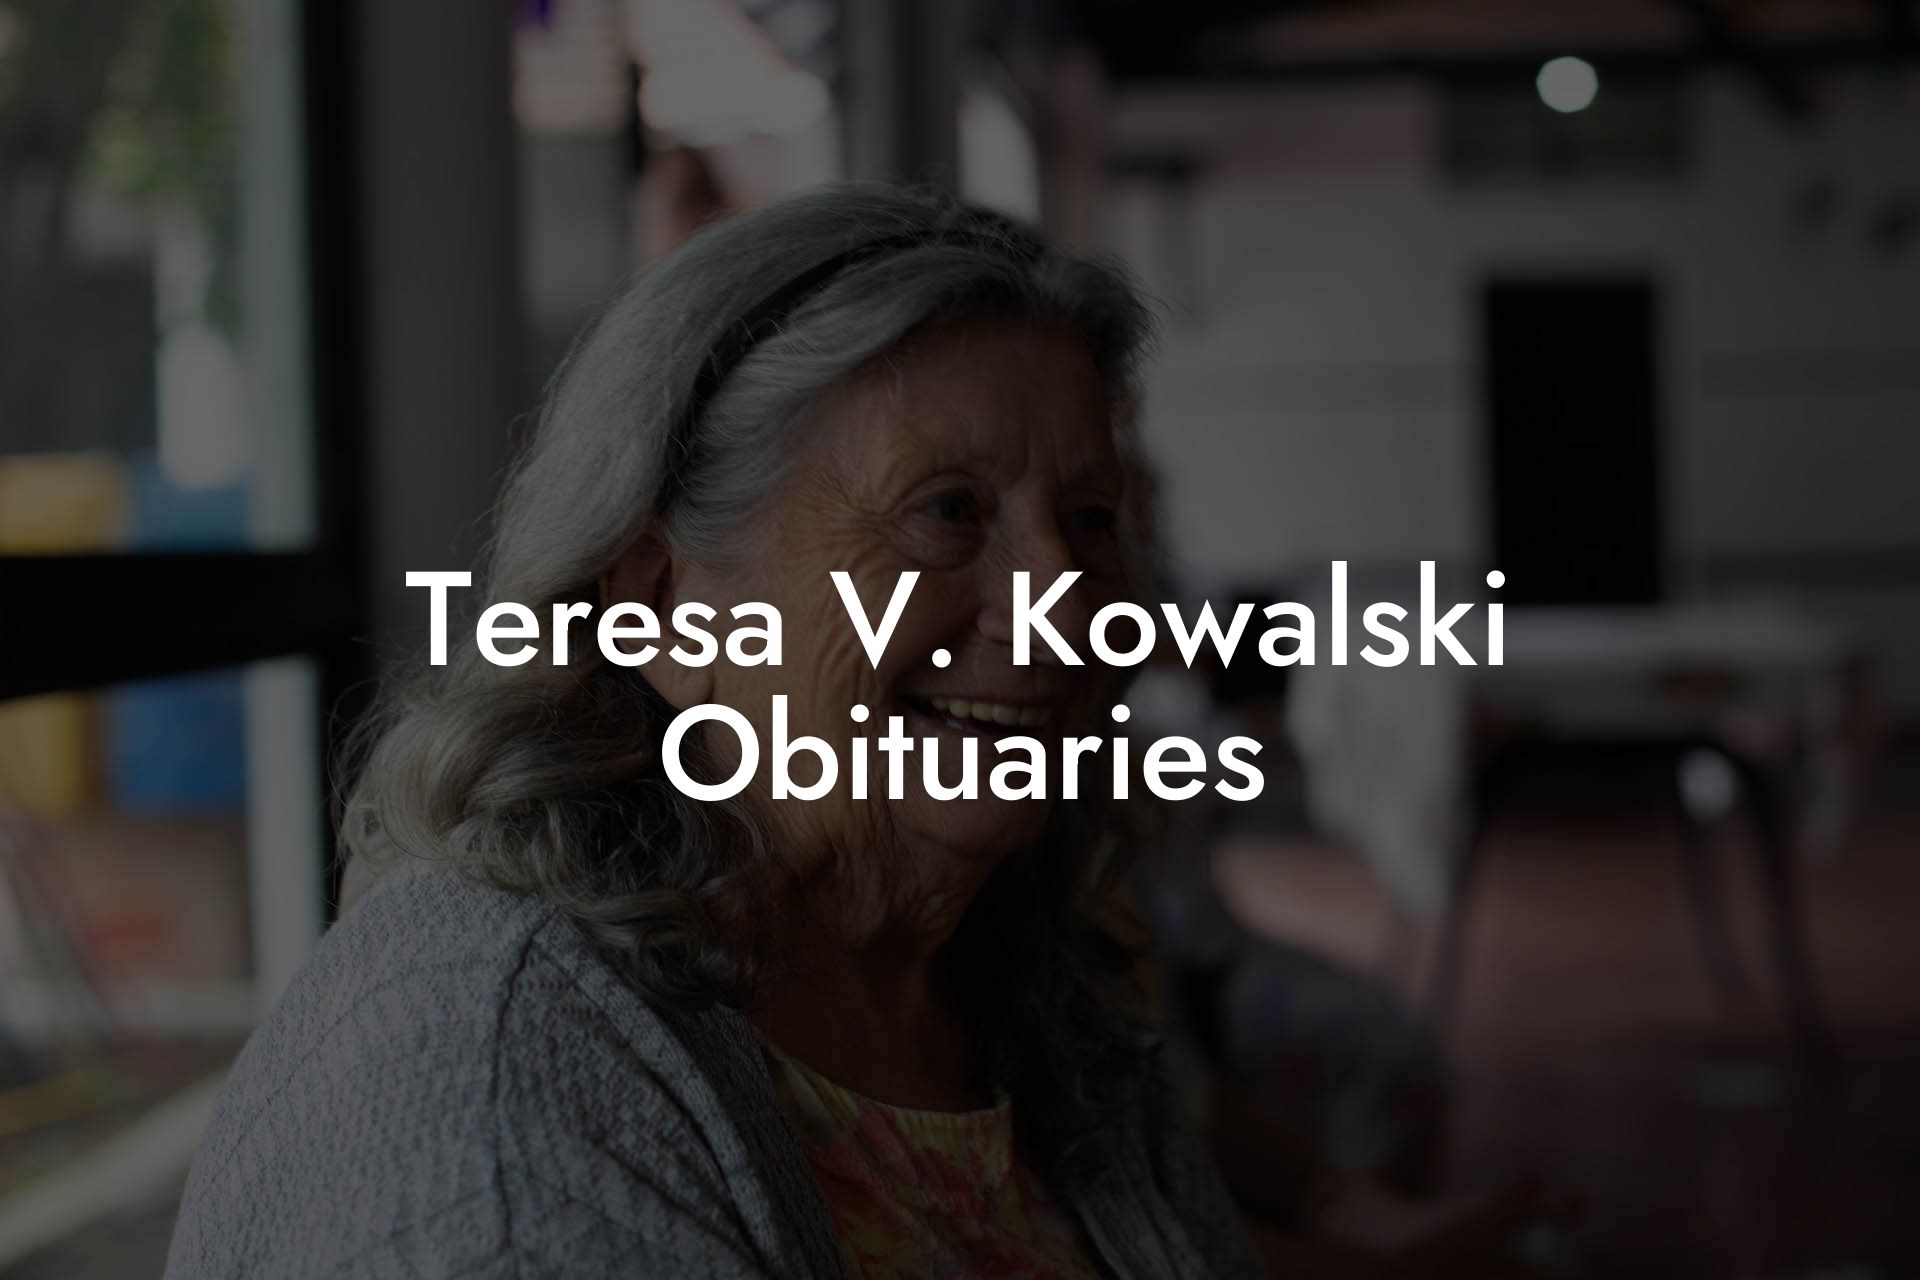 Teresa V. Kowalski Obituaries